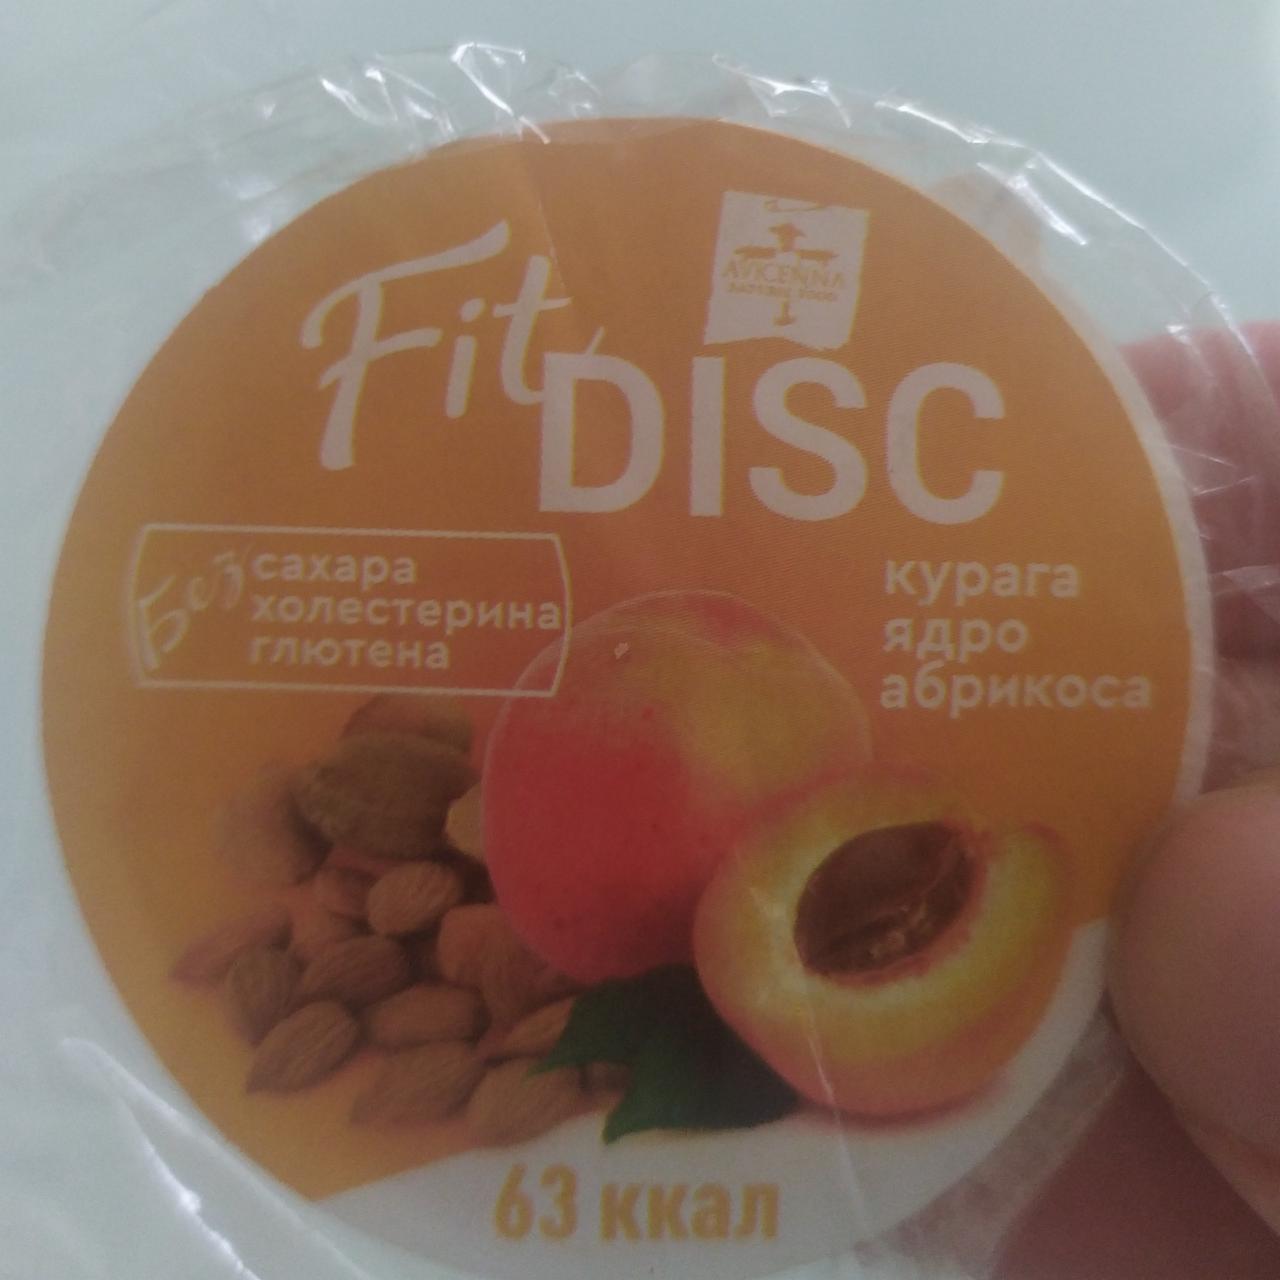 Фото - Курага ядро абрикоса Fit Disc